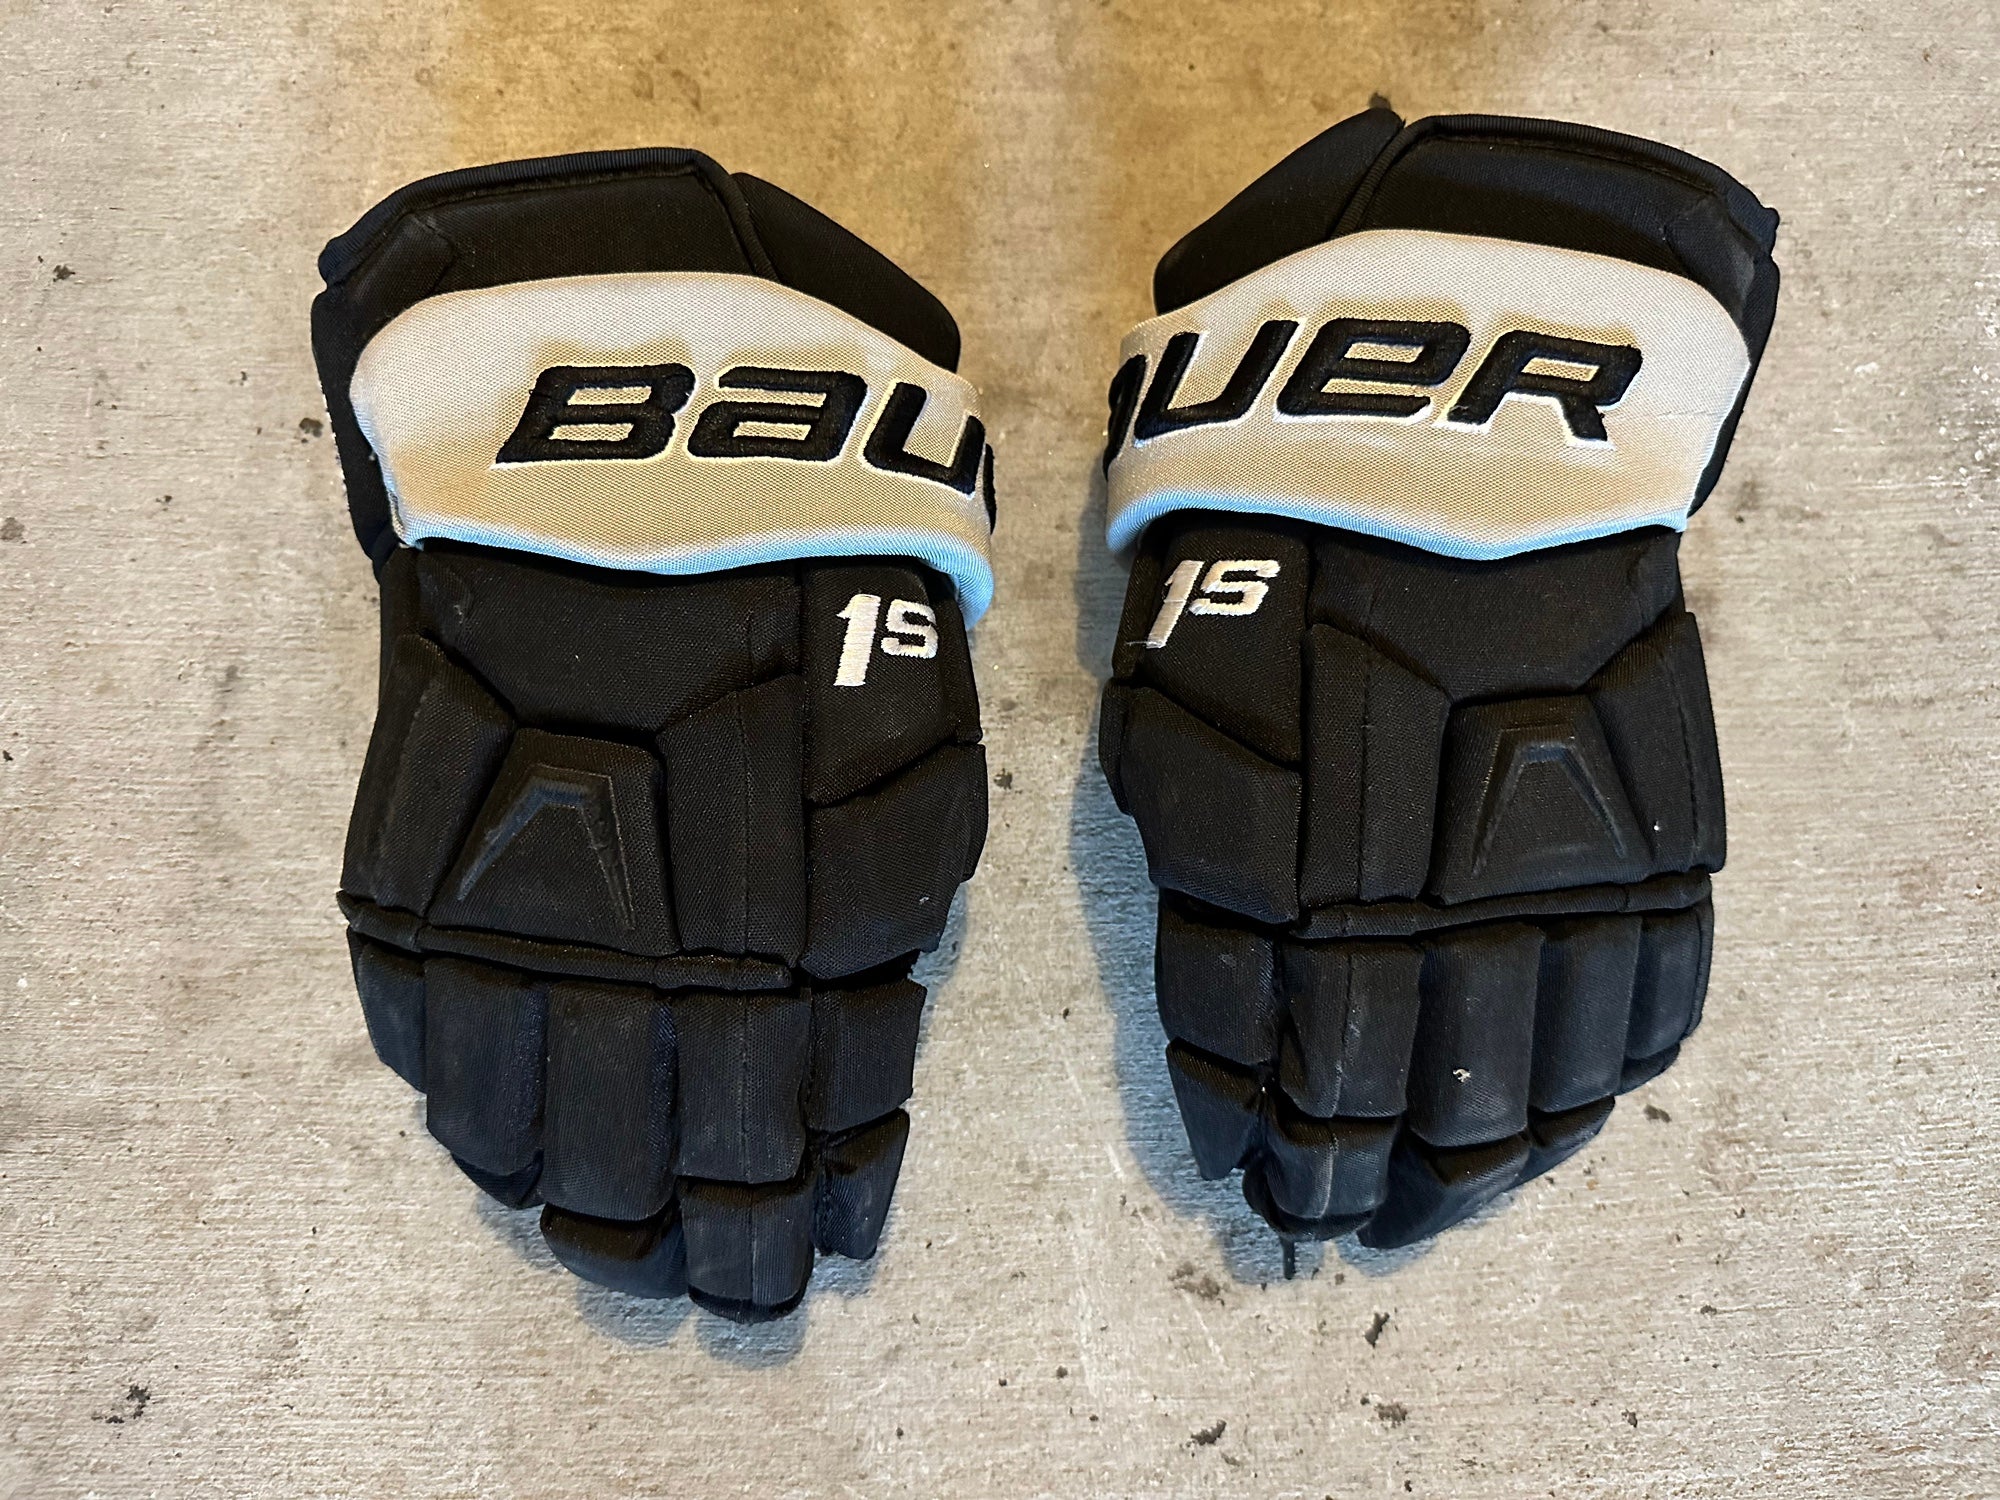 Brand New Rogle BK Swedish League Bauer Supreme 1S Gloves 14 Pro